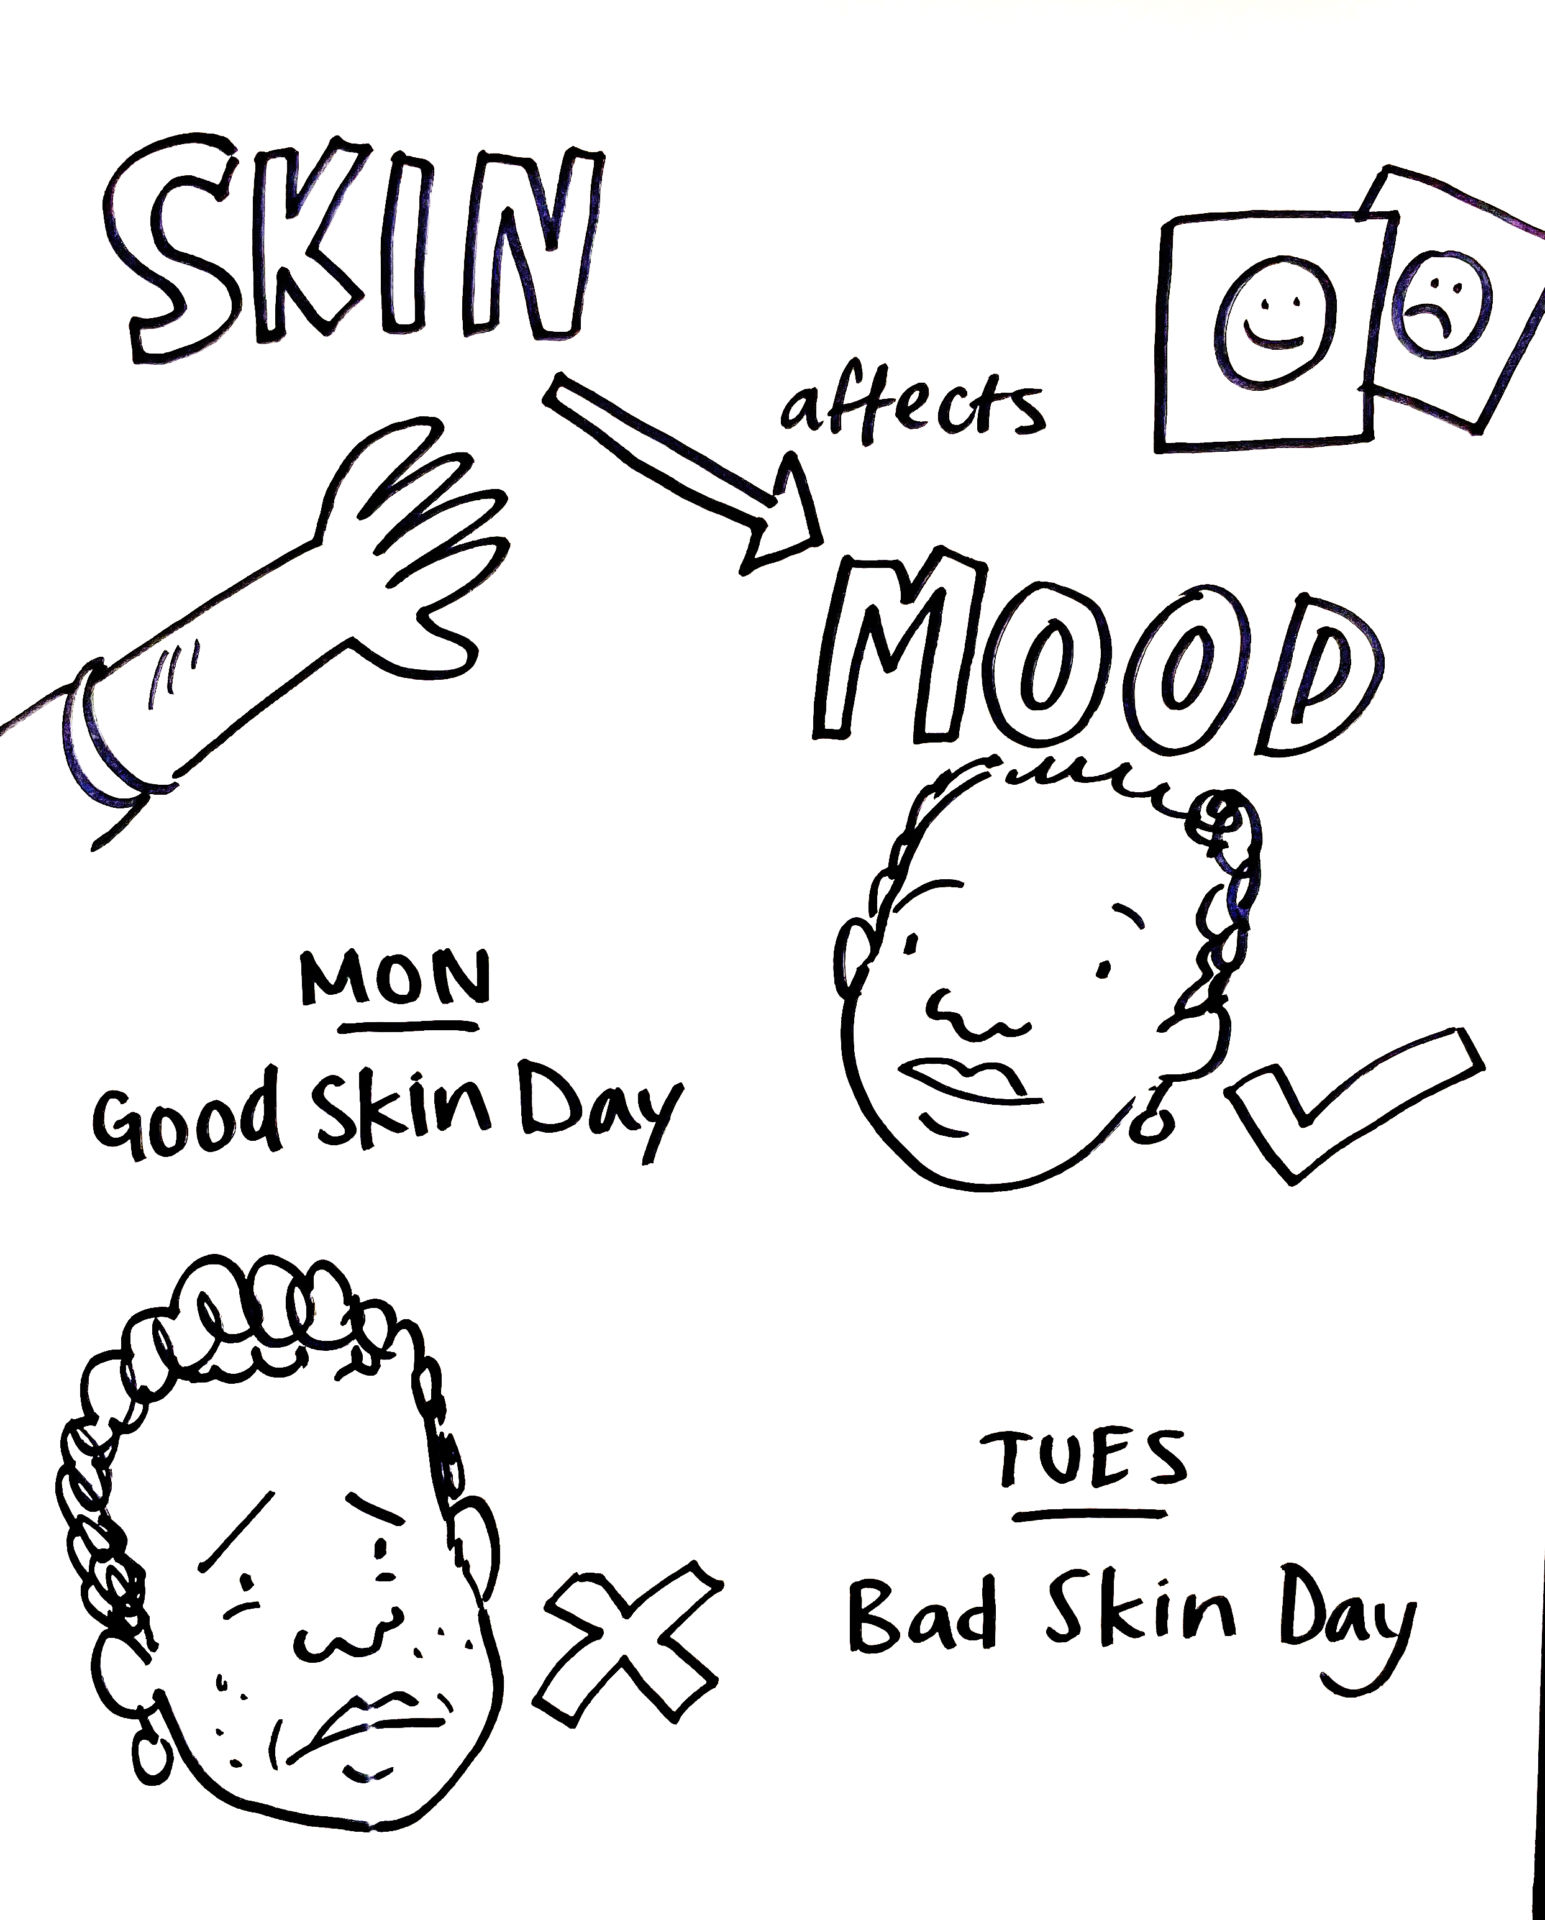 Skin Affects Mood